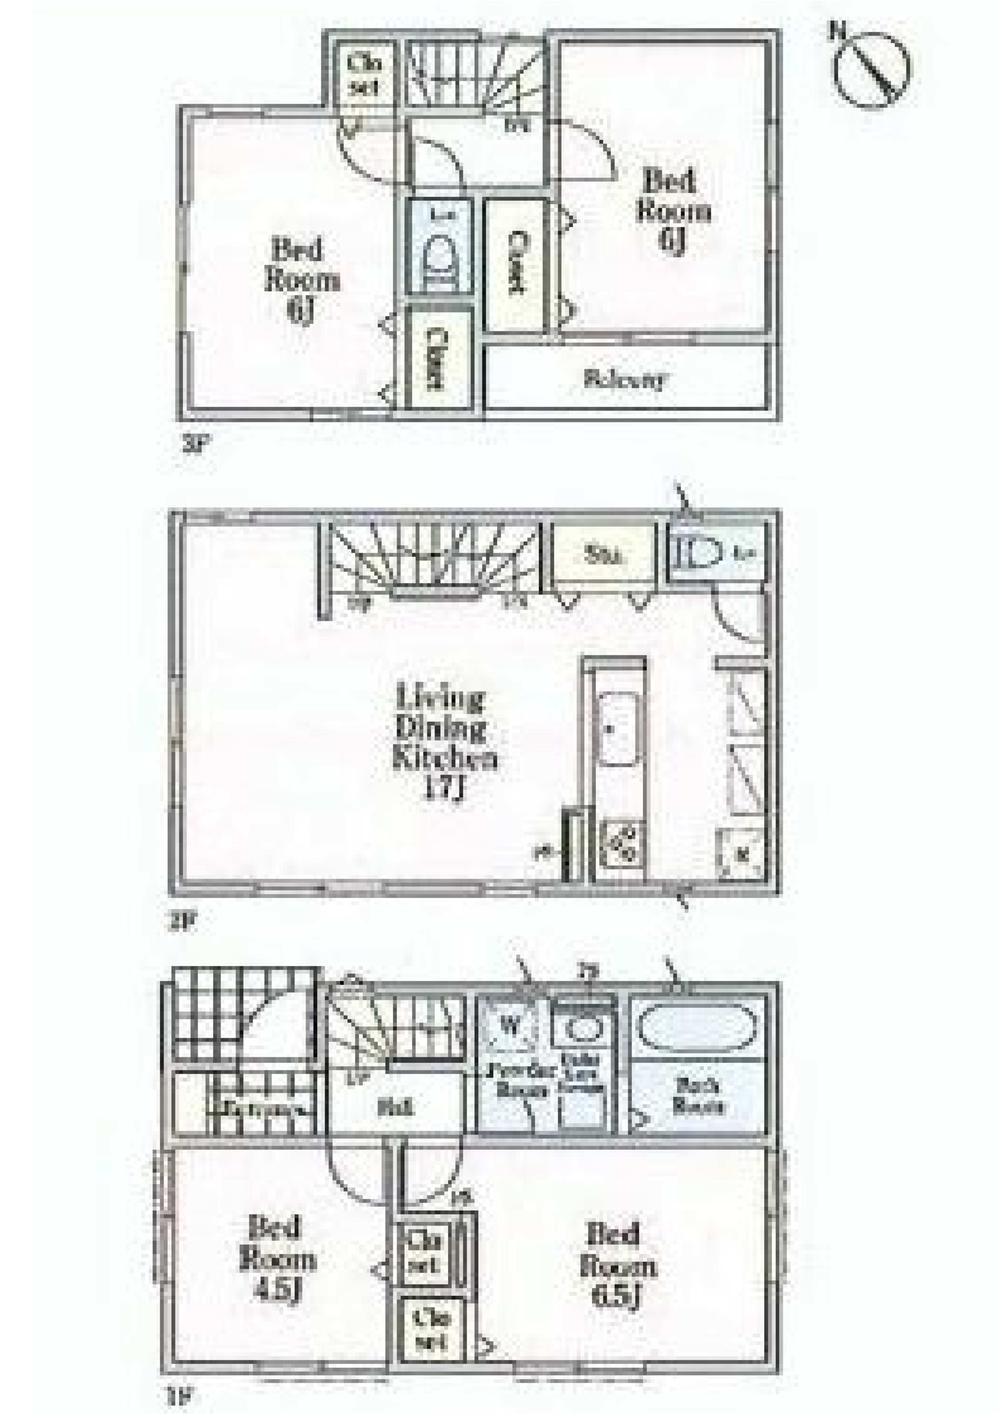 Floor plan. (1 Building), Price 34,800,000 yen, 4LDK, Land area 80.55 sq m , Building area 92.73 sq m